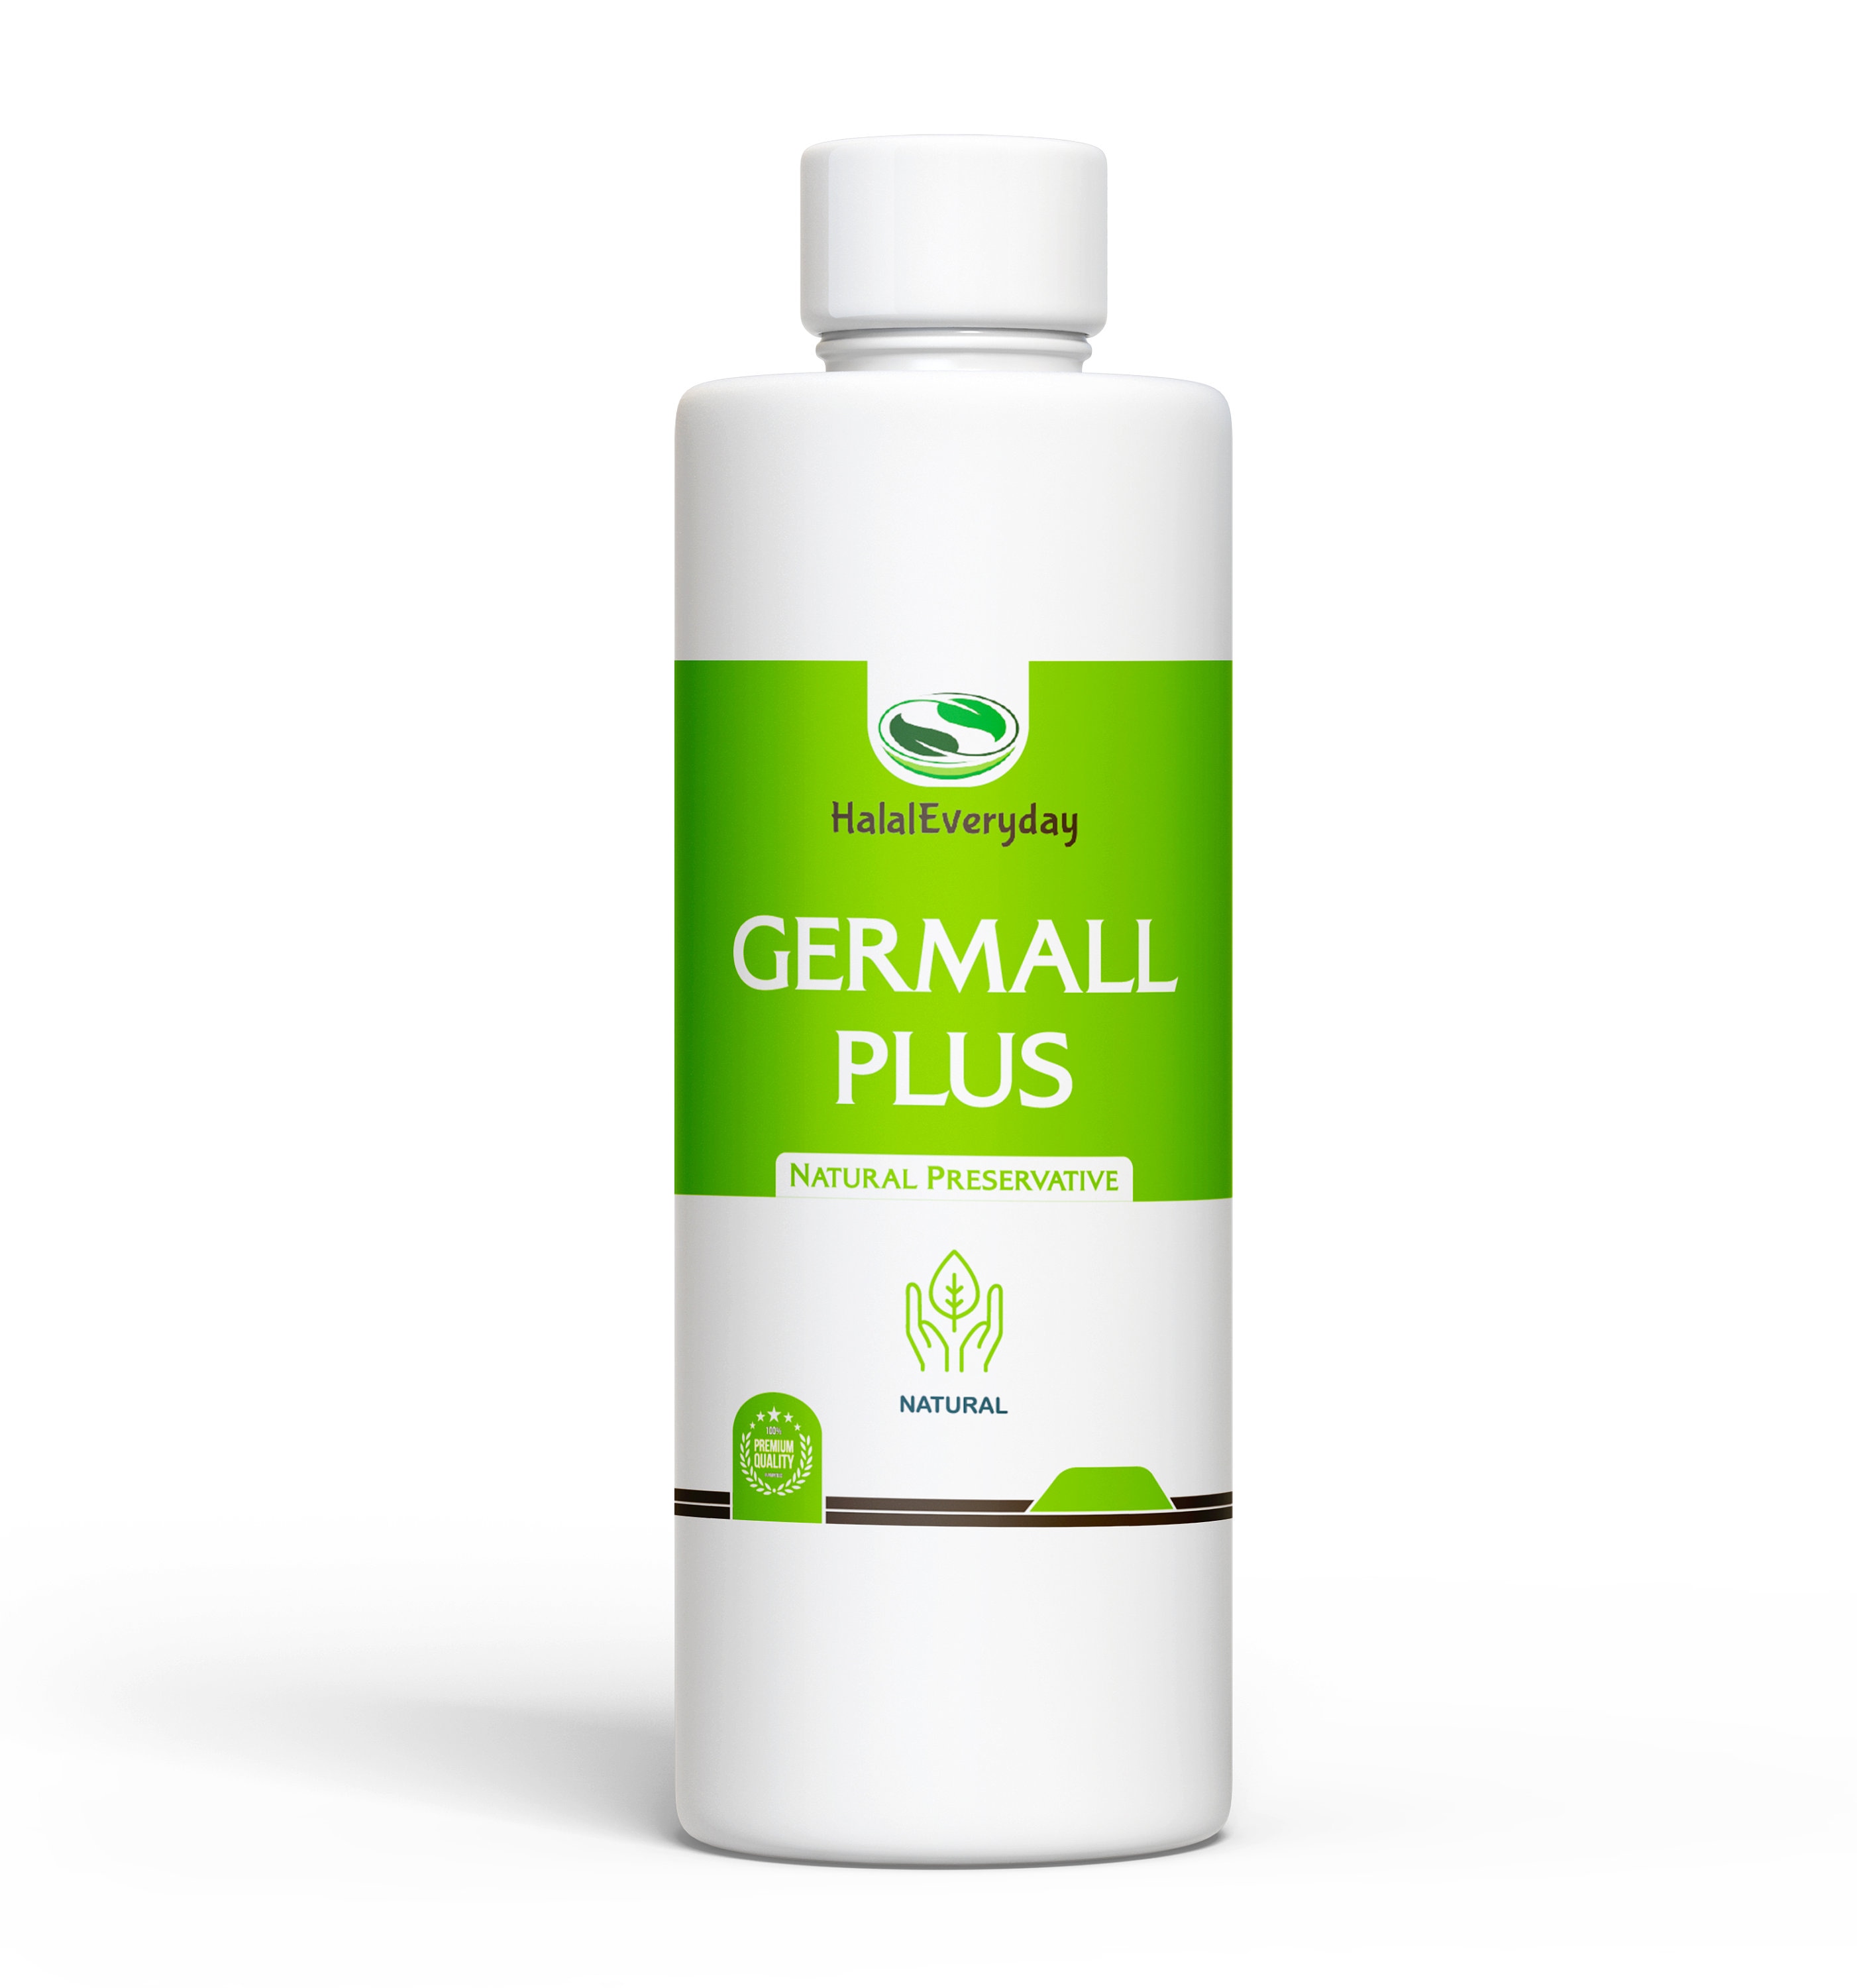 Liquid Germall Plus preservative - The Cosmetic Ward